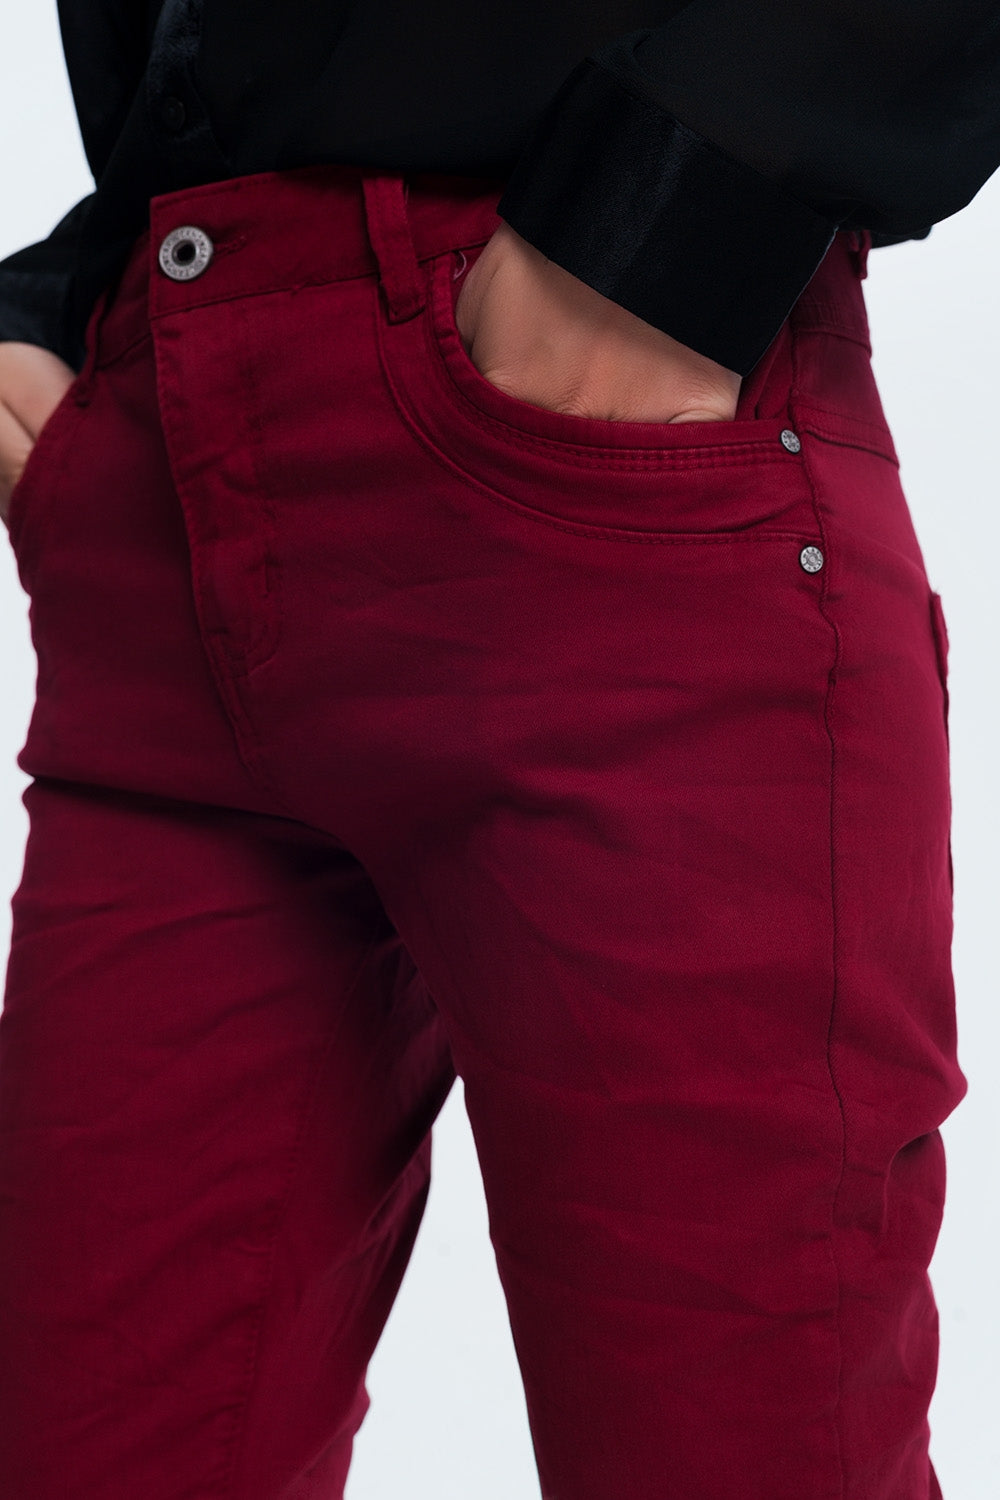 Drop Crotch Skinny Jean in Maroon